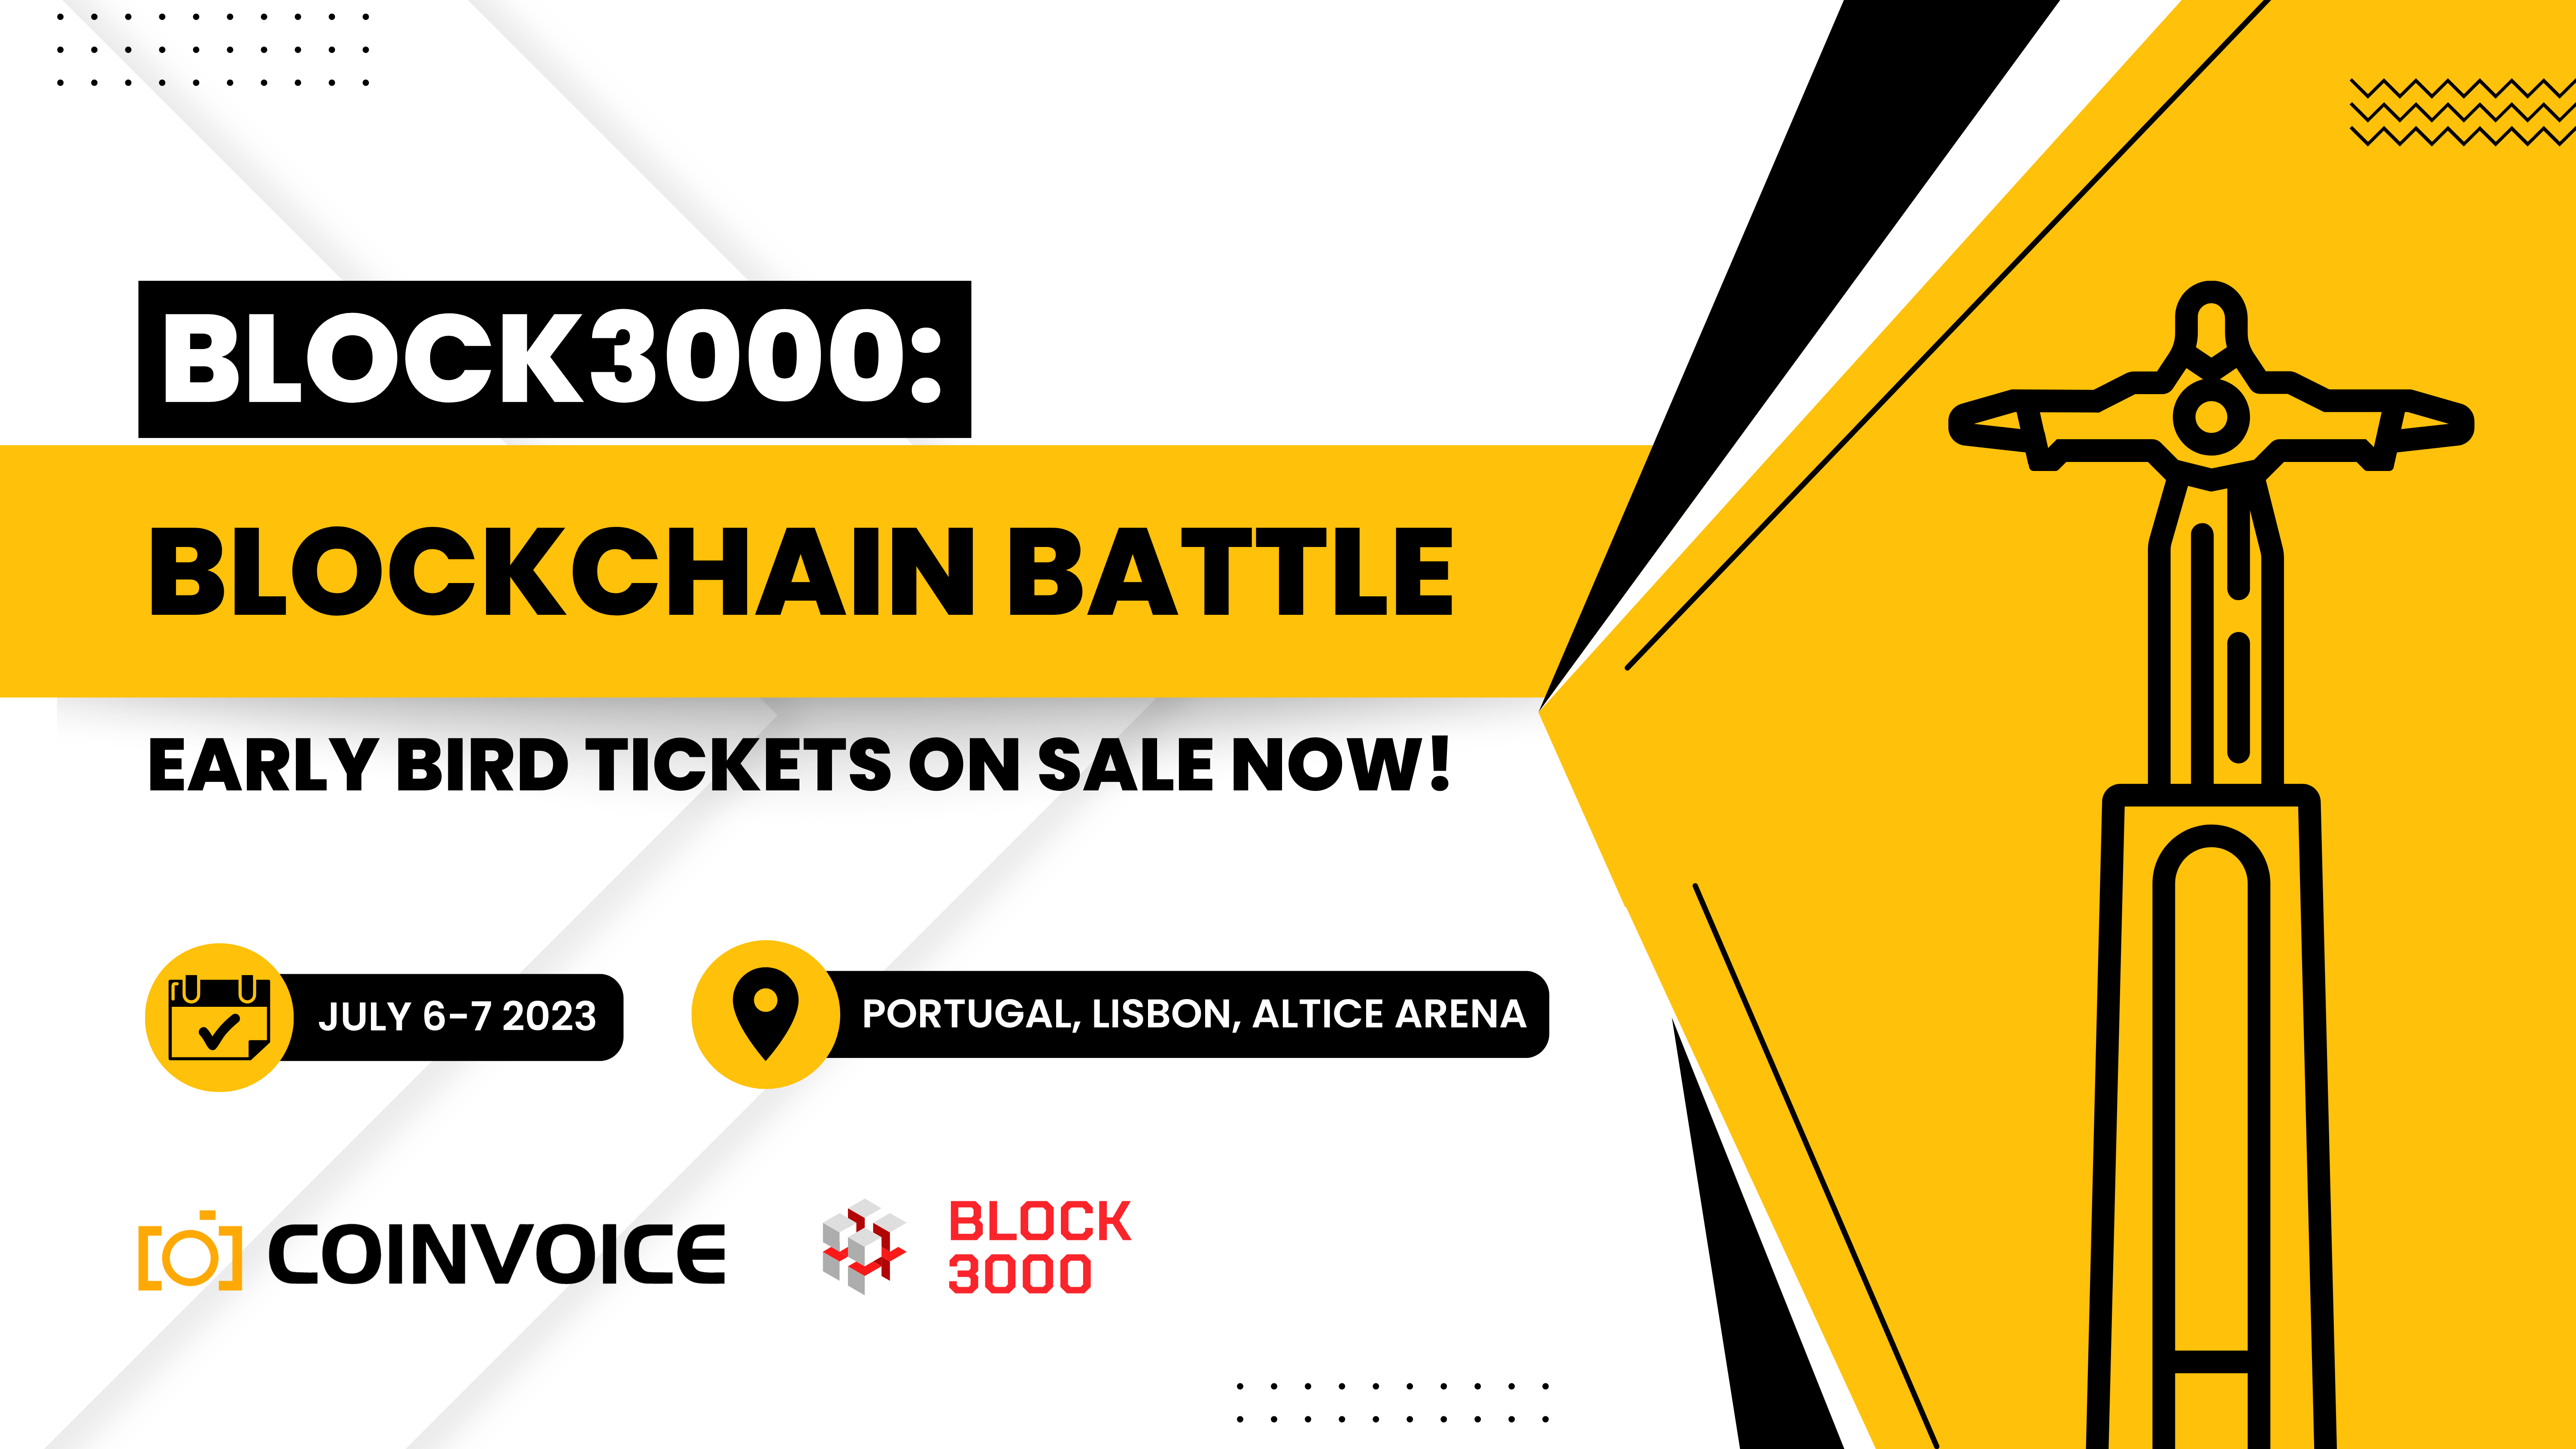 Block3000: Blockchain Battle Early Bird Tickets on Sale Now!